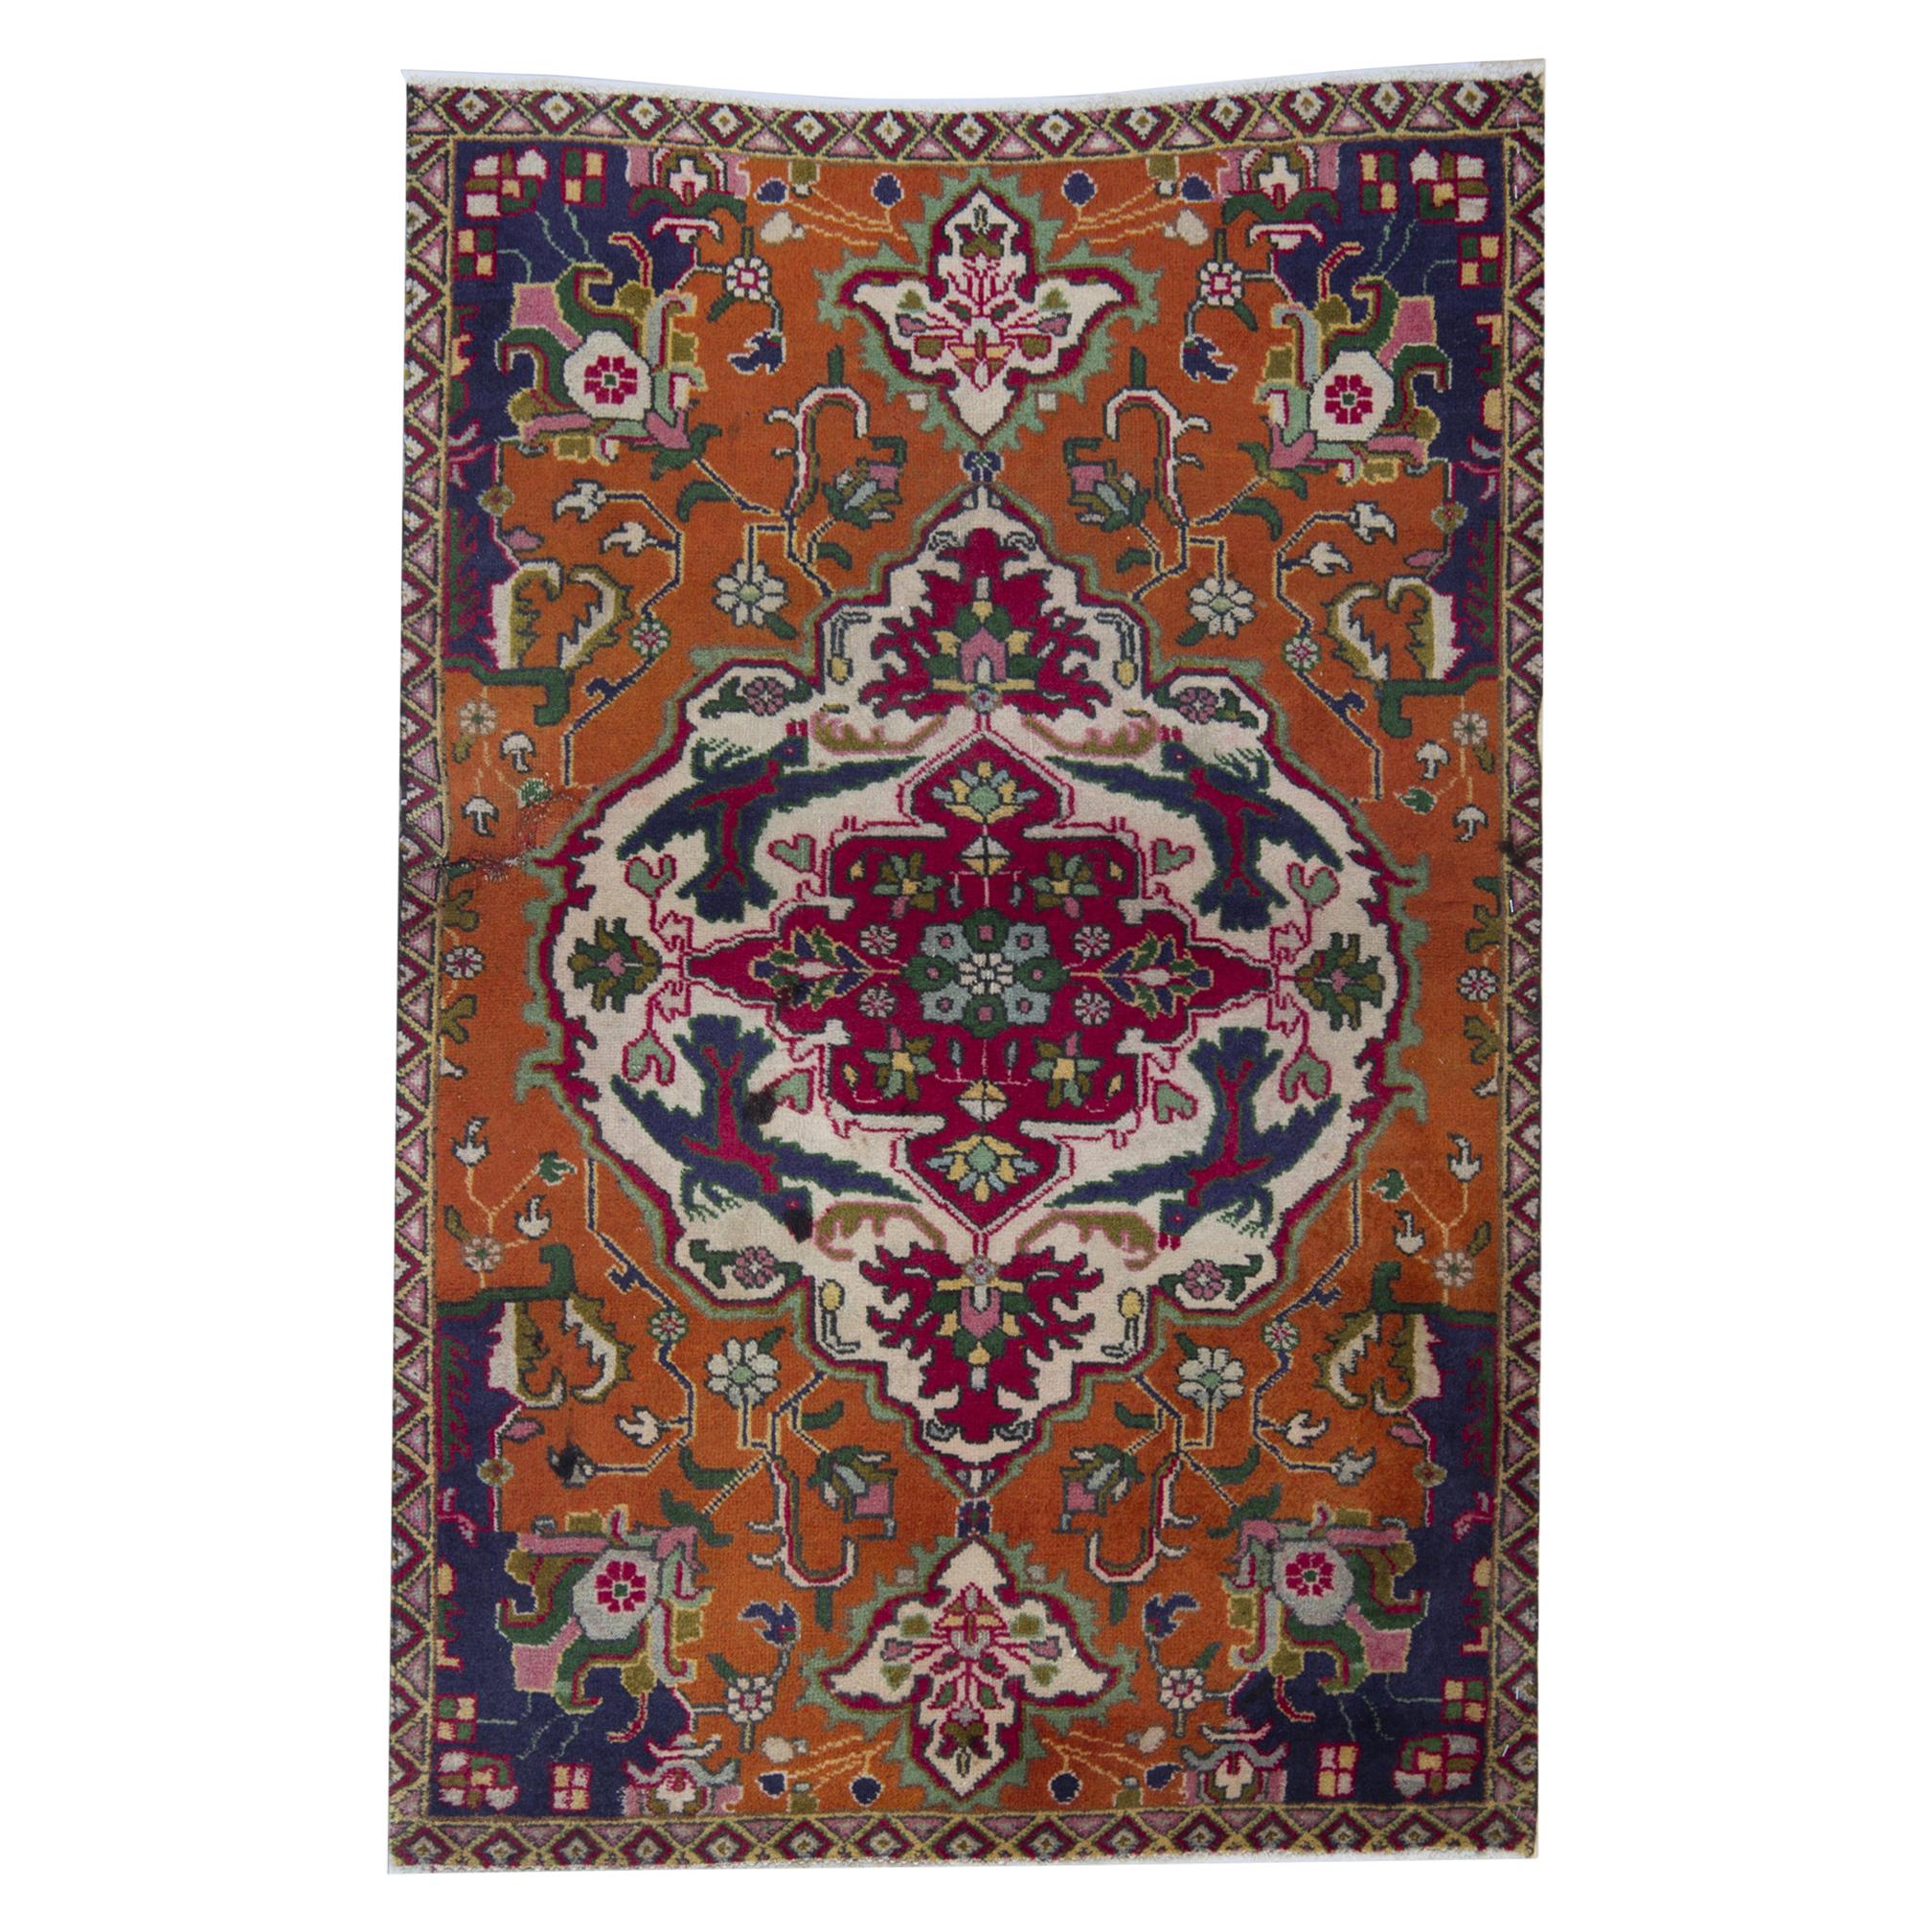 Vintage Carpet Handmade Turkish Rug, Oriental Wool Orange